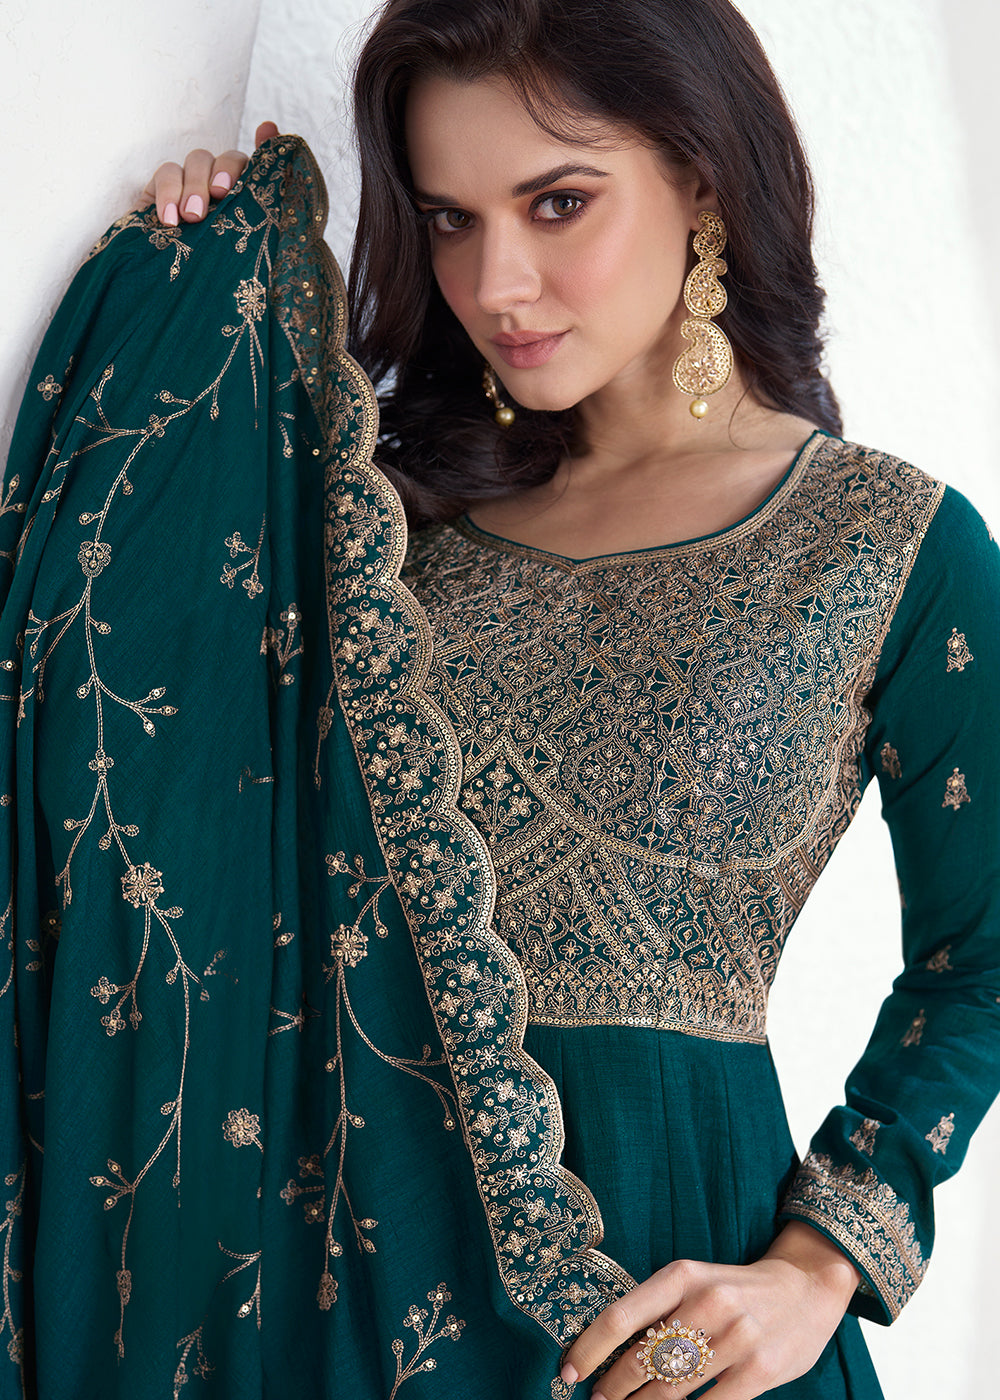 Buy Now Elegant Teal Embroidered Silk Wedding Anarkali Dress Online in USA, UK, Australia, New Zealand, Canada & Worldwide at Empress Clothing. 